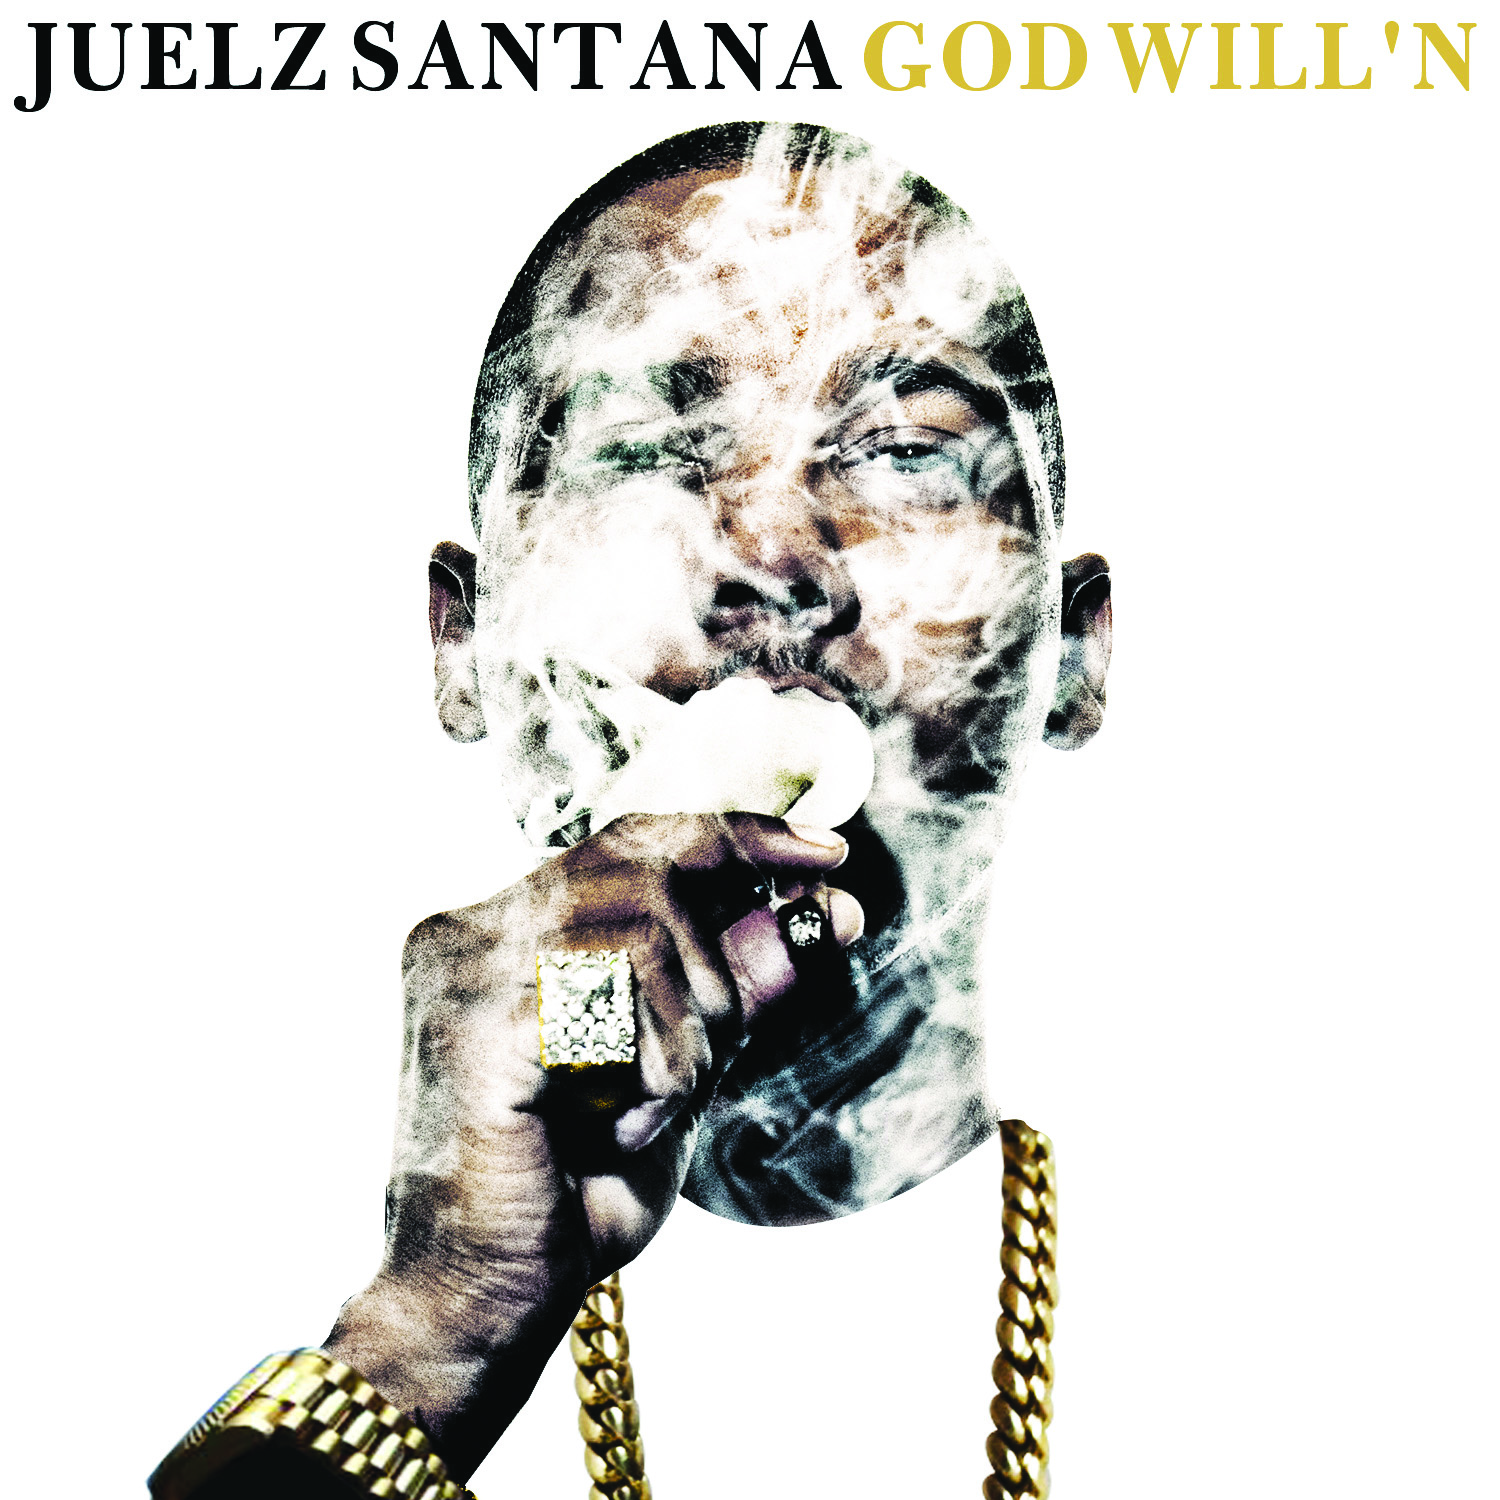 00-cover Juelz Santana (@thejuelzsantana) Ft. Wiz Khalifa (@wizkhalifa) - Everything Is Good (Prod. By @Kinobeats)  